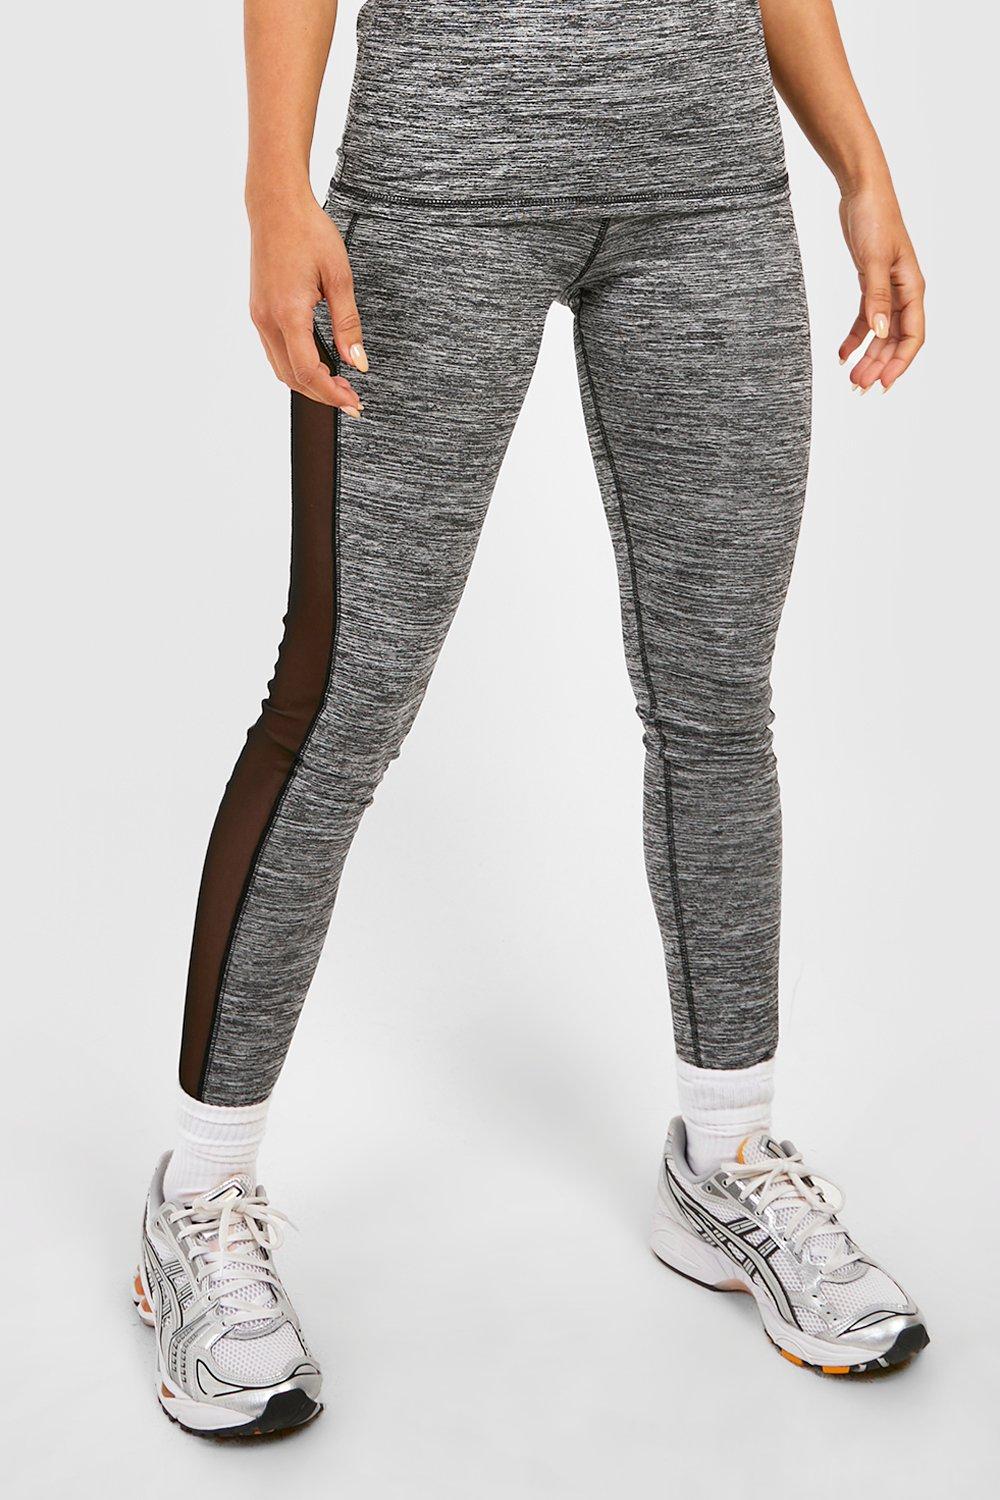 https://media.boohoo.com/i/boohoo/gzz26405_black_xl_3/female-black-marl-mesh-panel-workout-legging